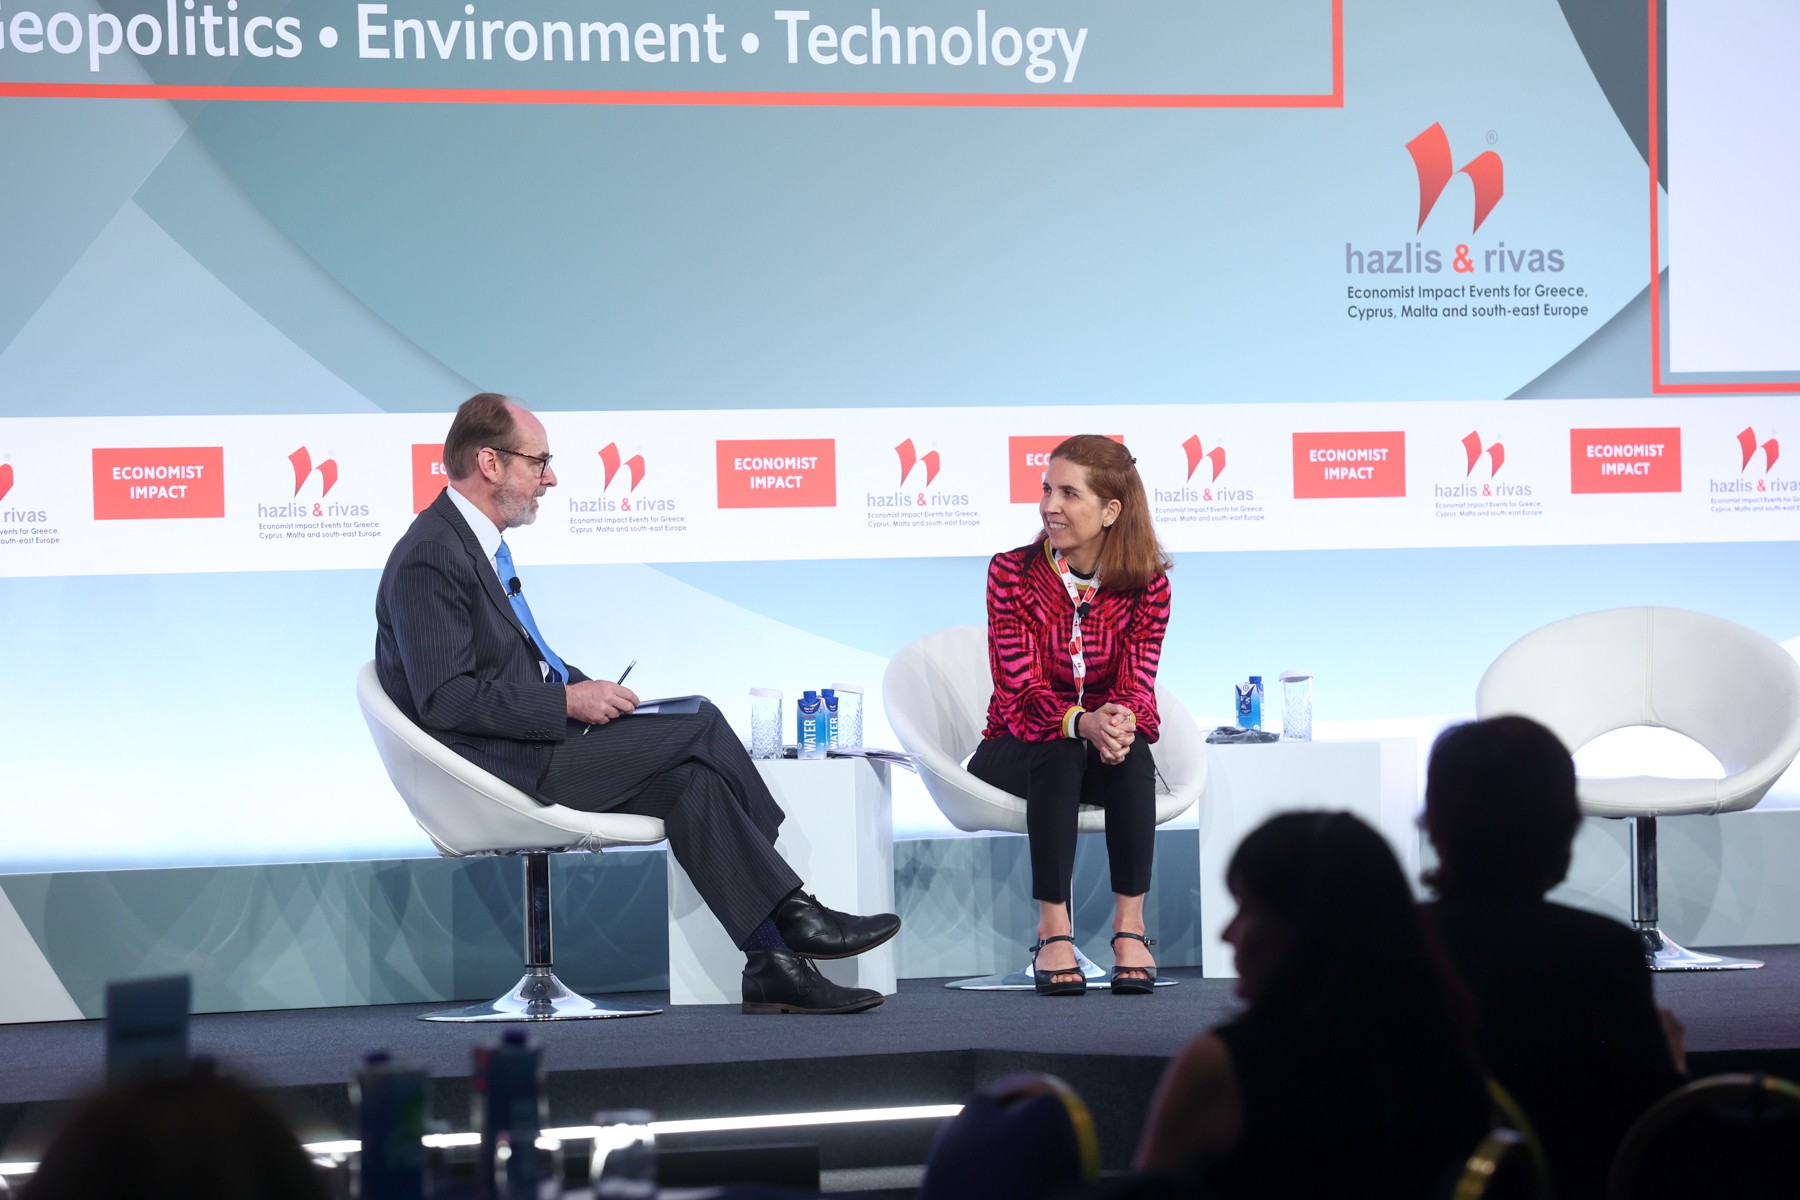 Vodafone Institute: Με την Τεχνητή Νοημοσύνη μπορούμε να αντιμετωπίσουμε τις μεγαλύτερες προκλήσεις του 21ου αιώνα» (pic)